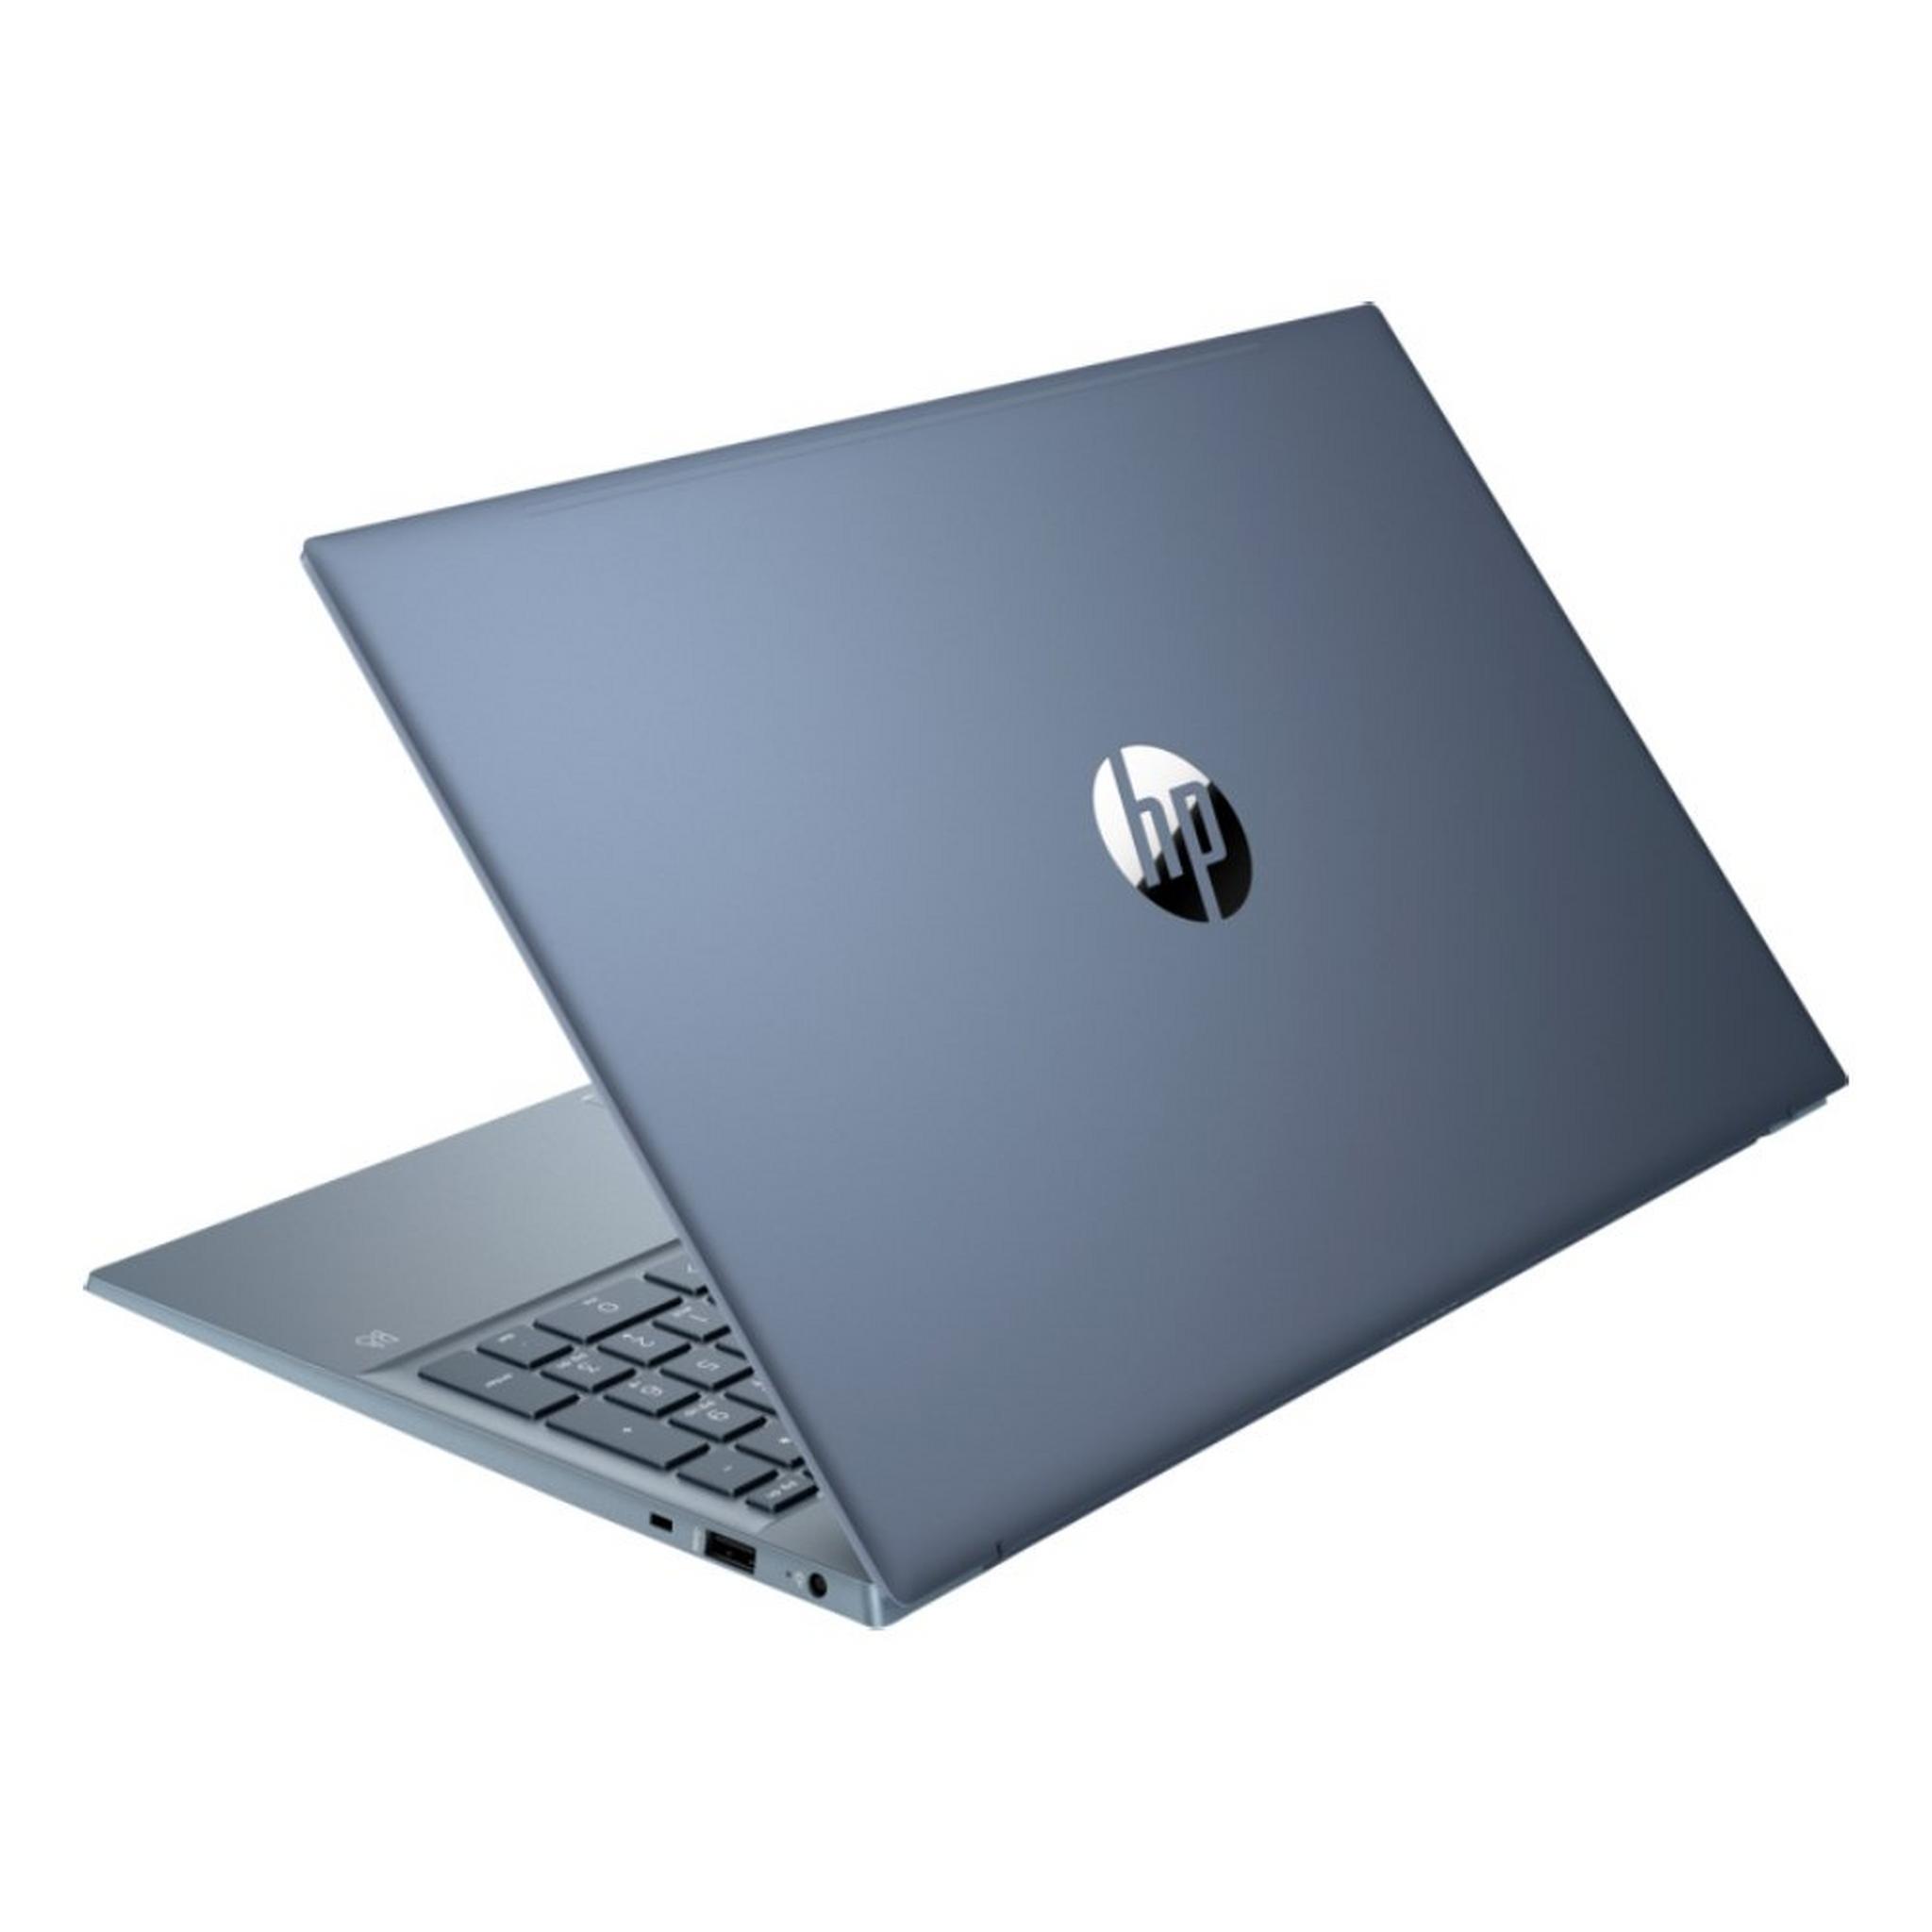 HP Pavilion 15 AMD Ryzen 5, 8GB RAM, 512GB SSD, 15.6-inch Laptop - Blue